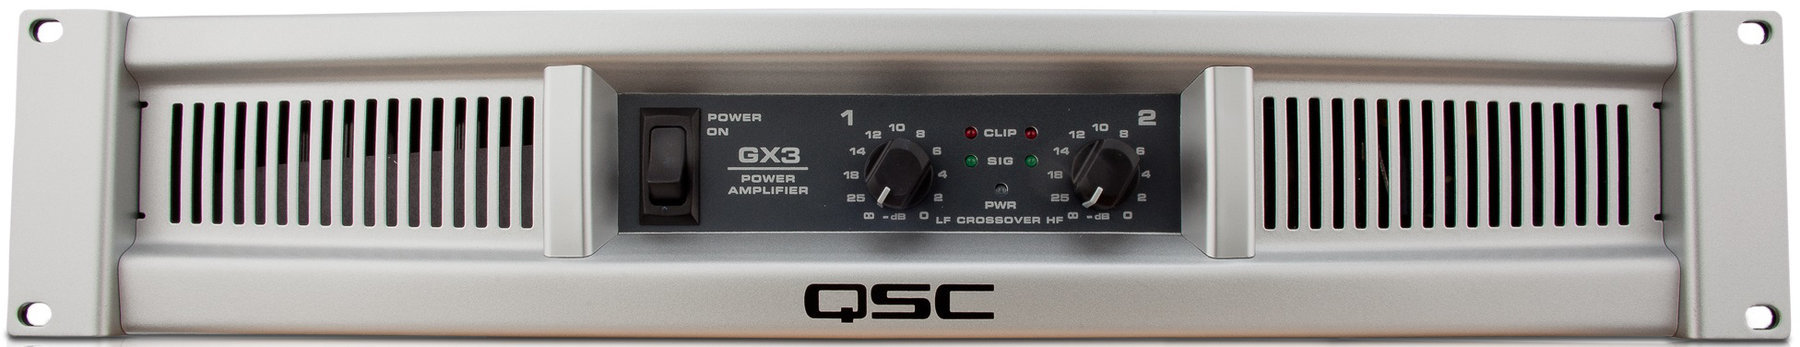 Endstufe Leistungsverstärker QSC GX3 Endstufe Leistungsverstärker